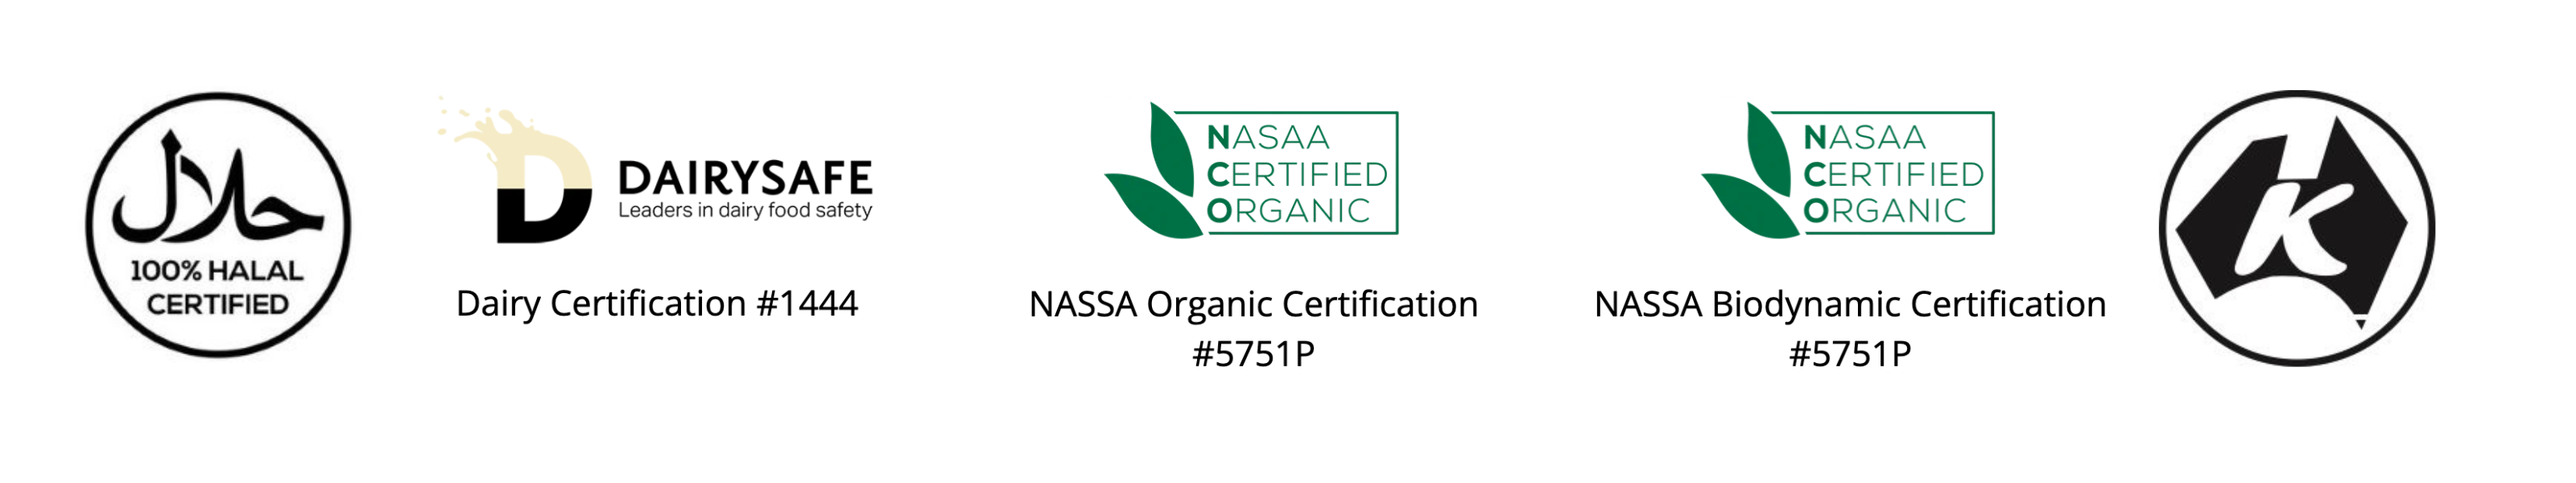 omghee certification Halal certified Dairy organic certification NASSA certification